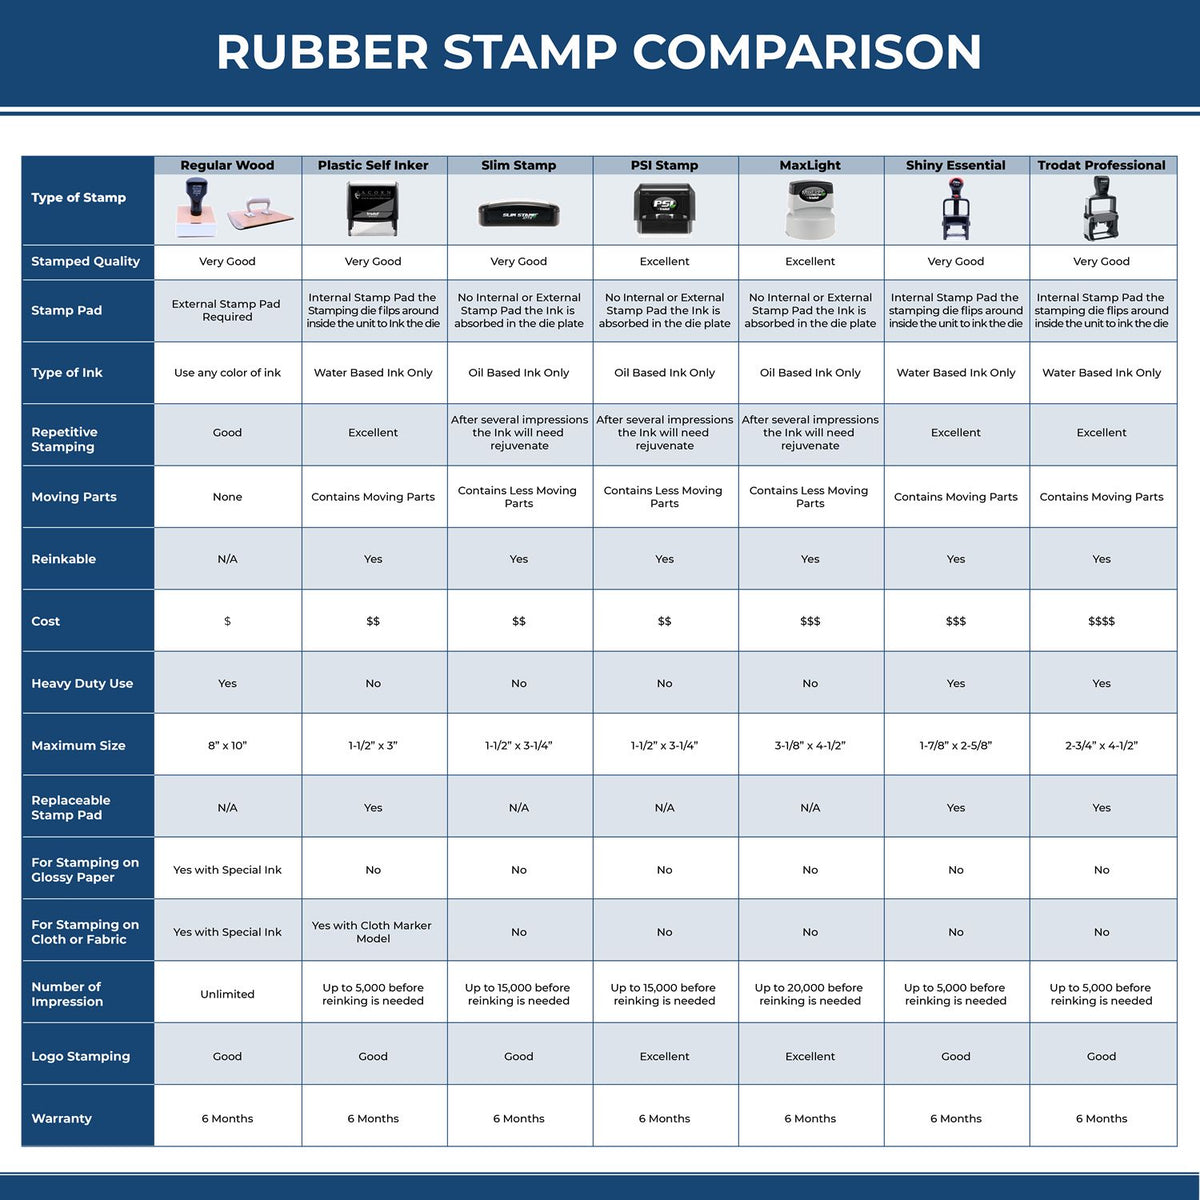 Top Secret Rubber Stamp 4752R Rubber Stamp Comparison